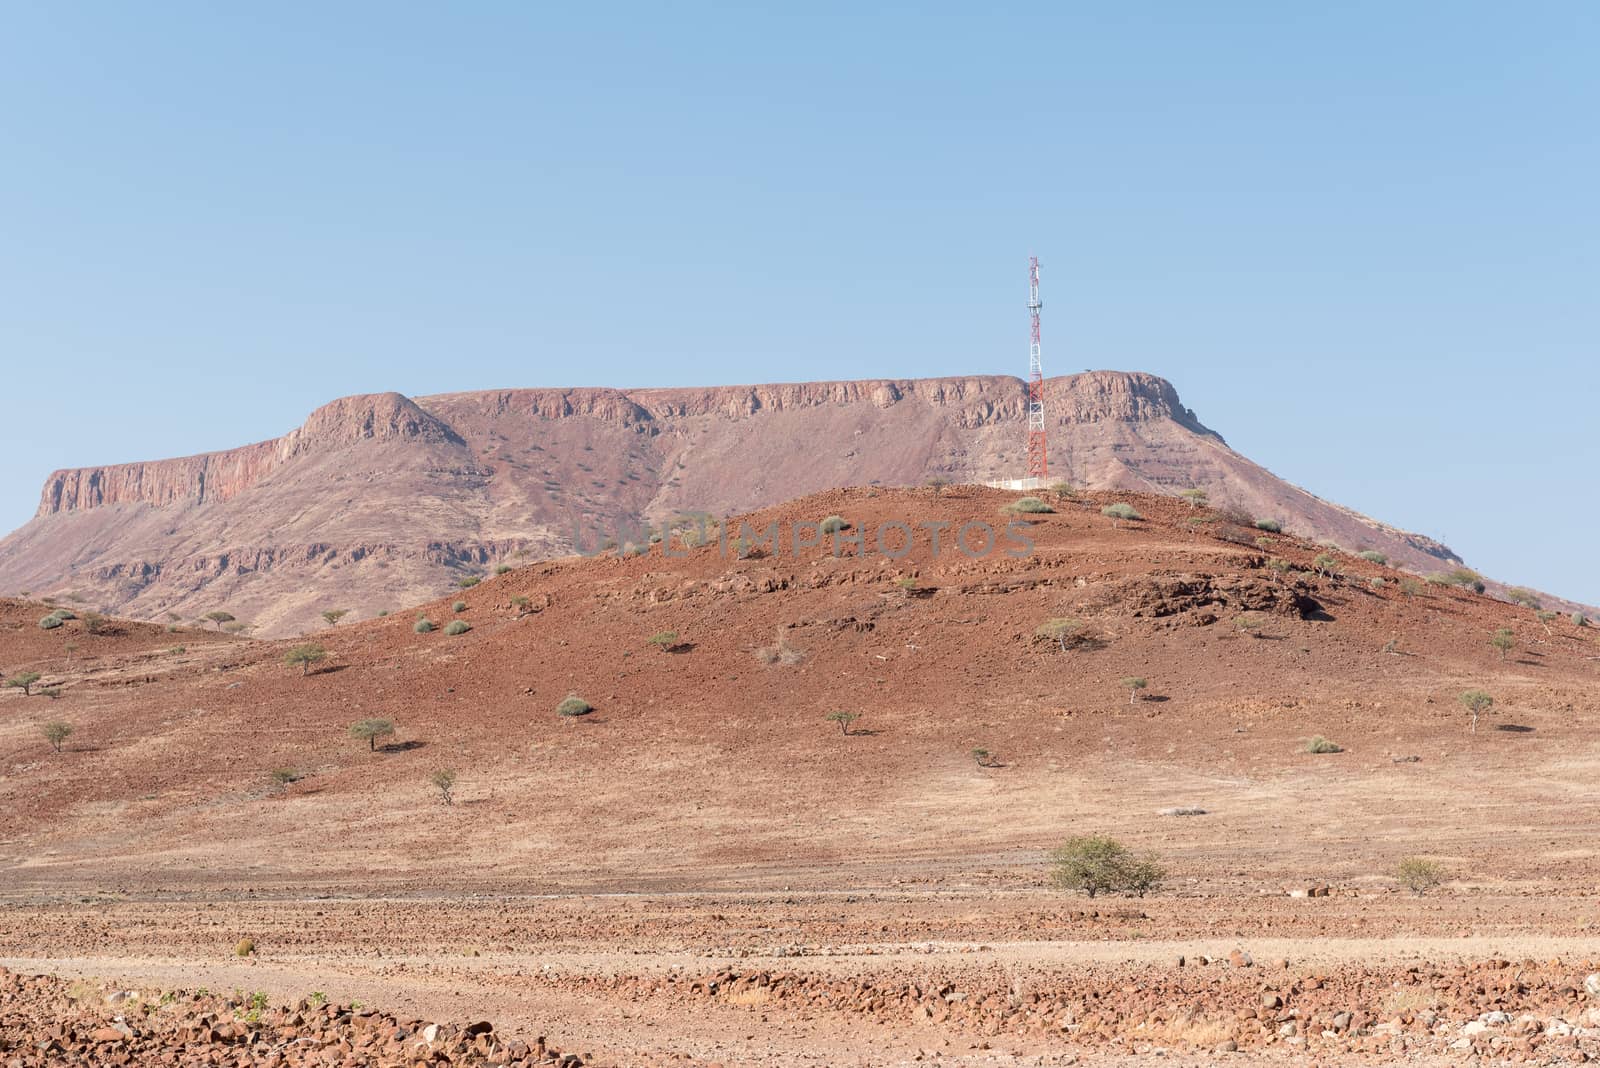 Cellphone tower on hill in the semi-desert landscape, Bergsig by dpreezg